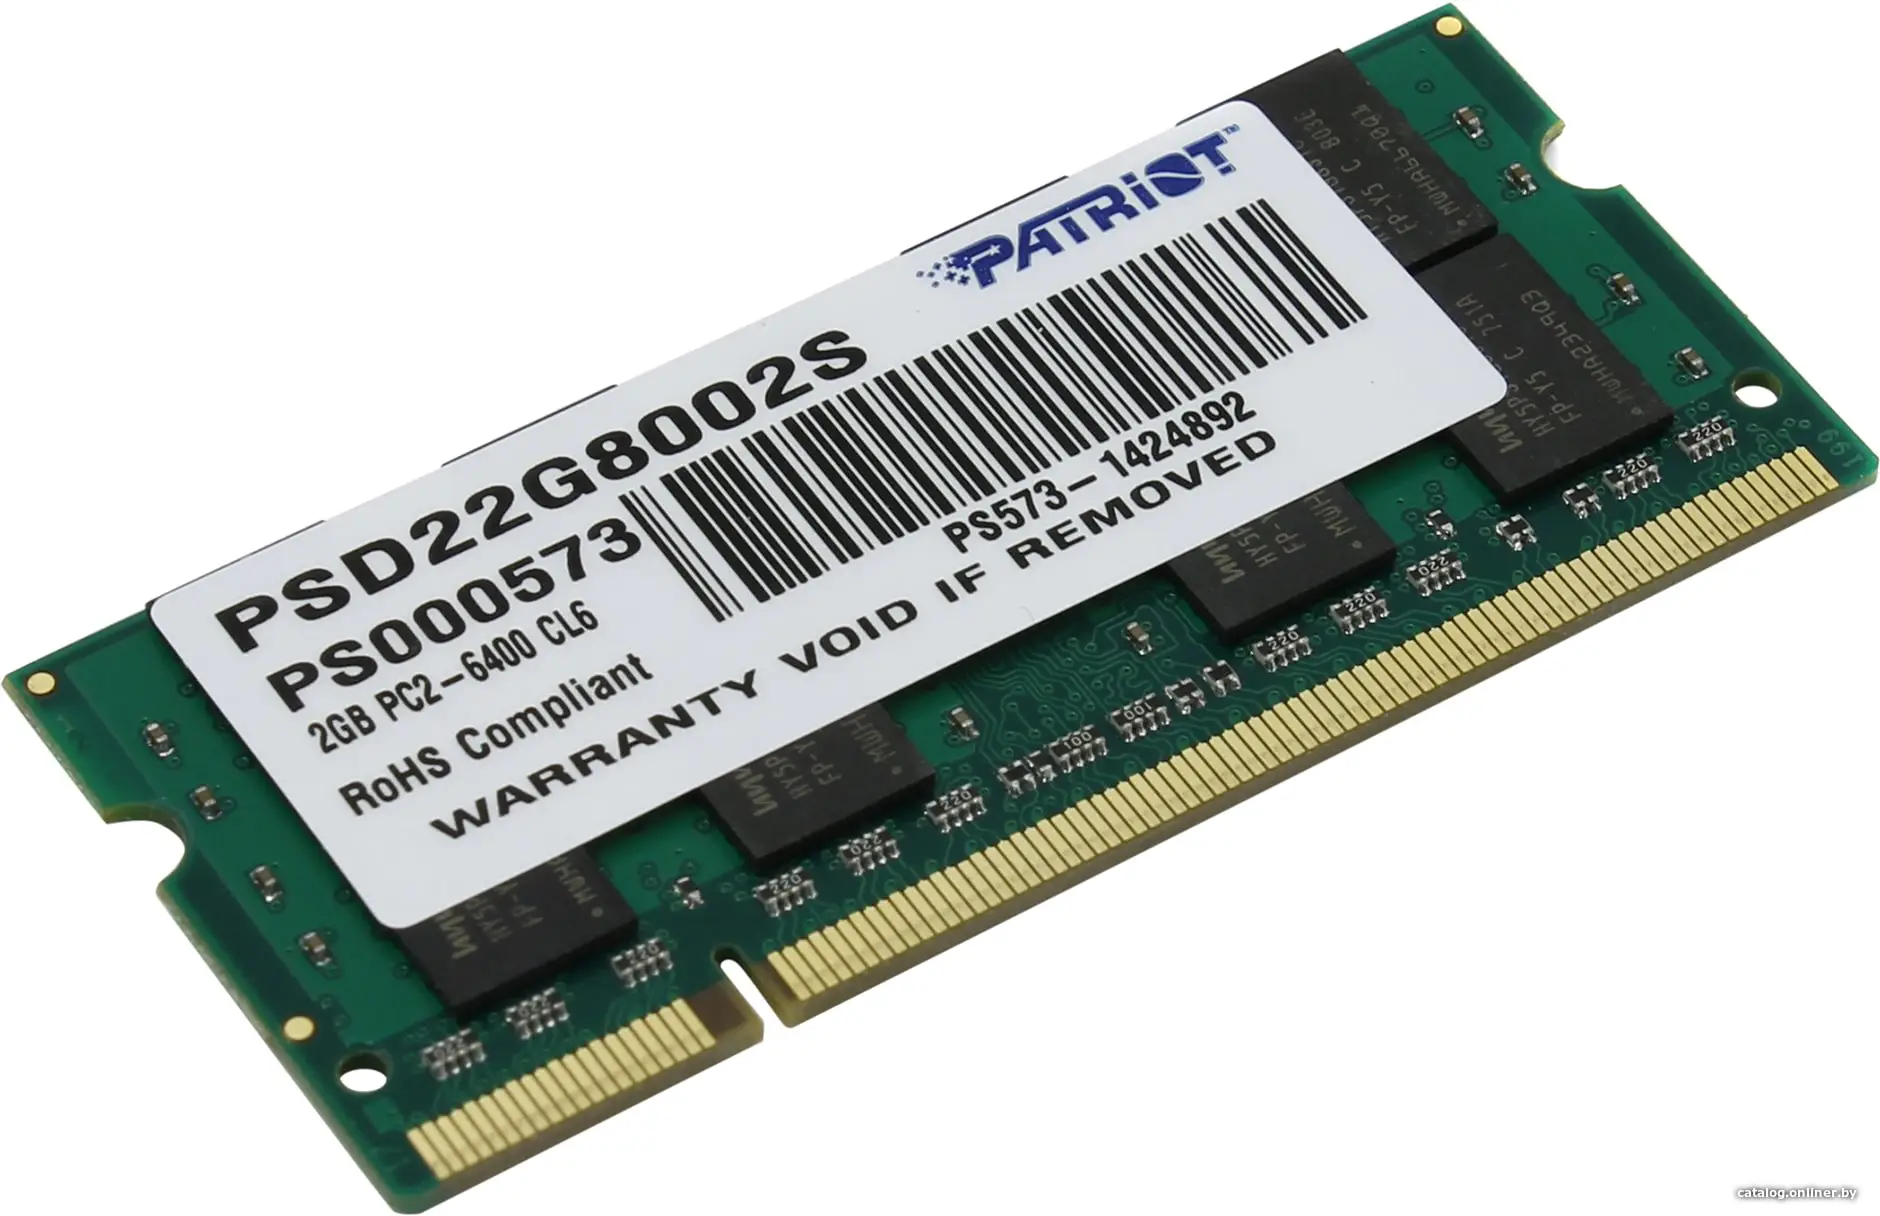 Купить Patriot 2GB DDR2 SO-DIMM PC2-6400 (PSD22G8002S), цена, опт и розница